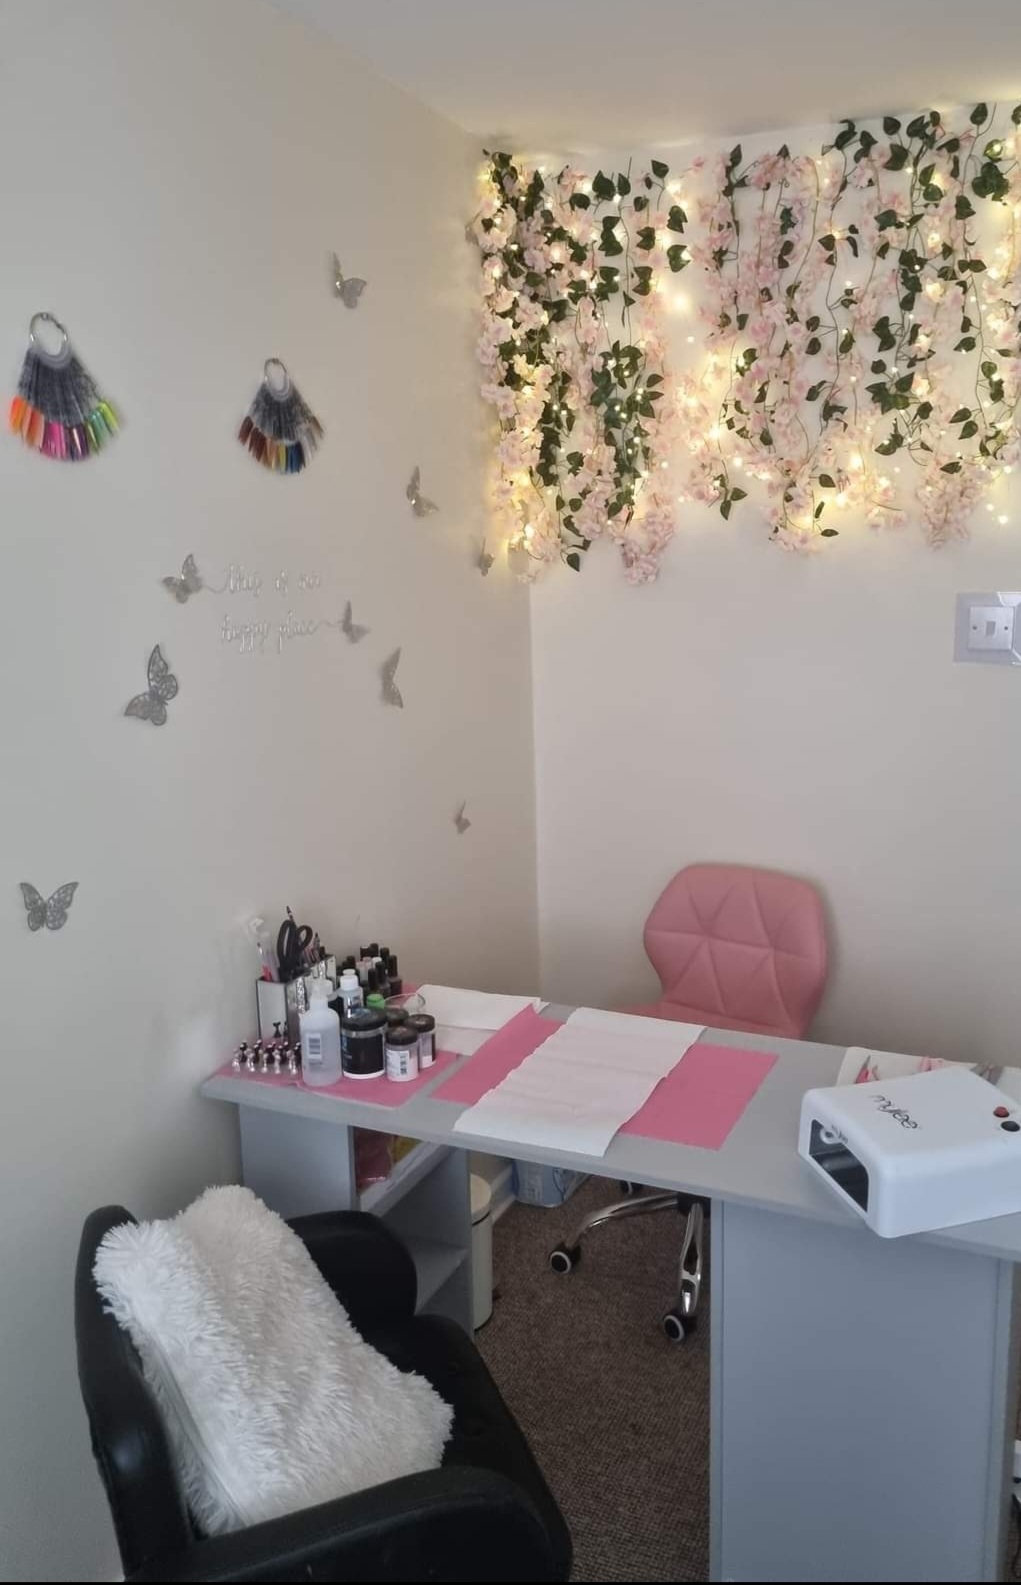 Amanda opened her home salon in Parr in September 2019